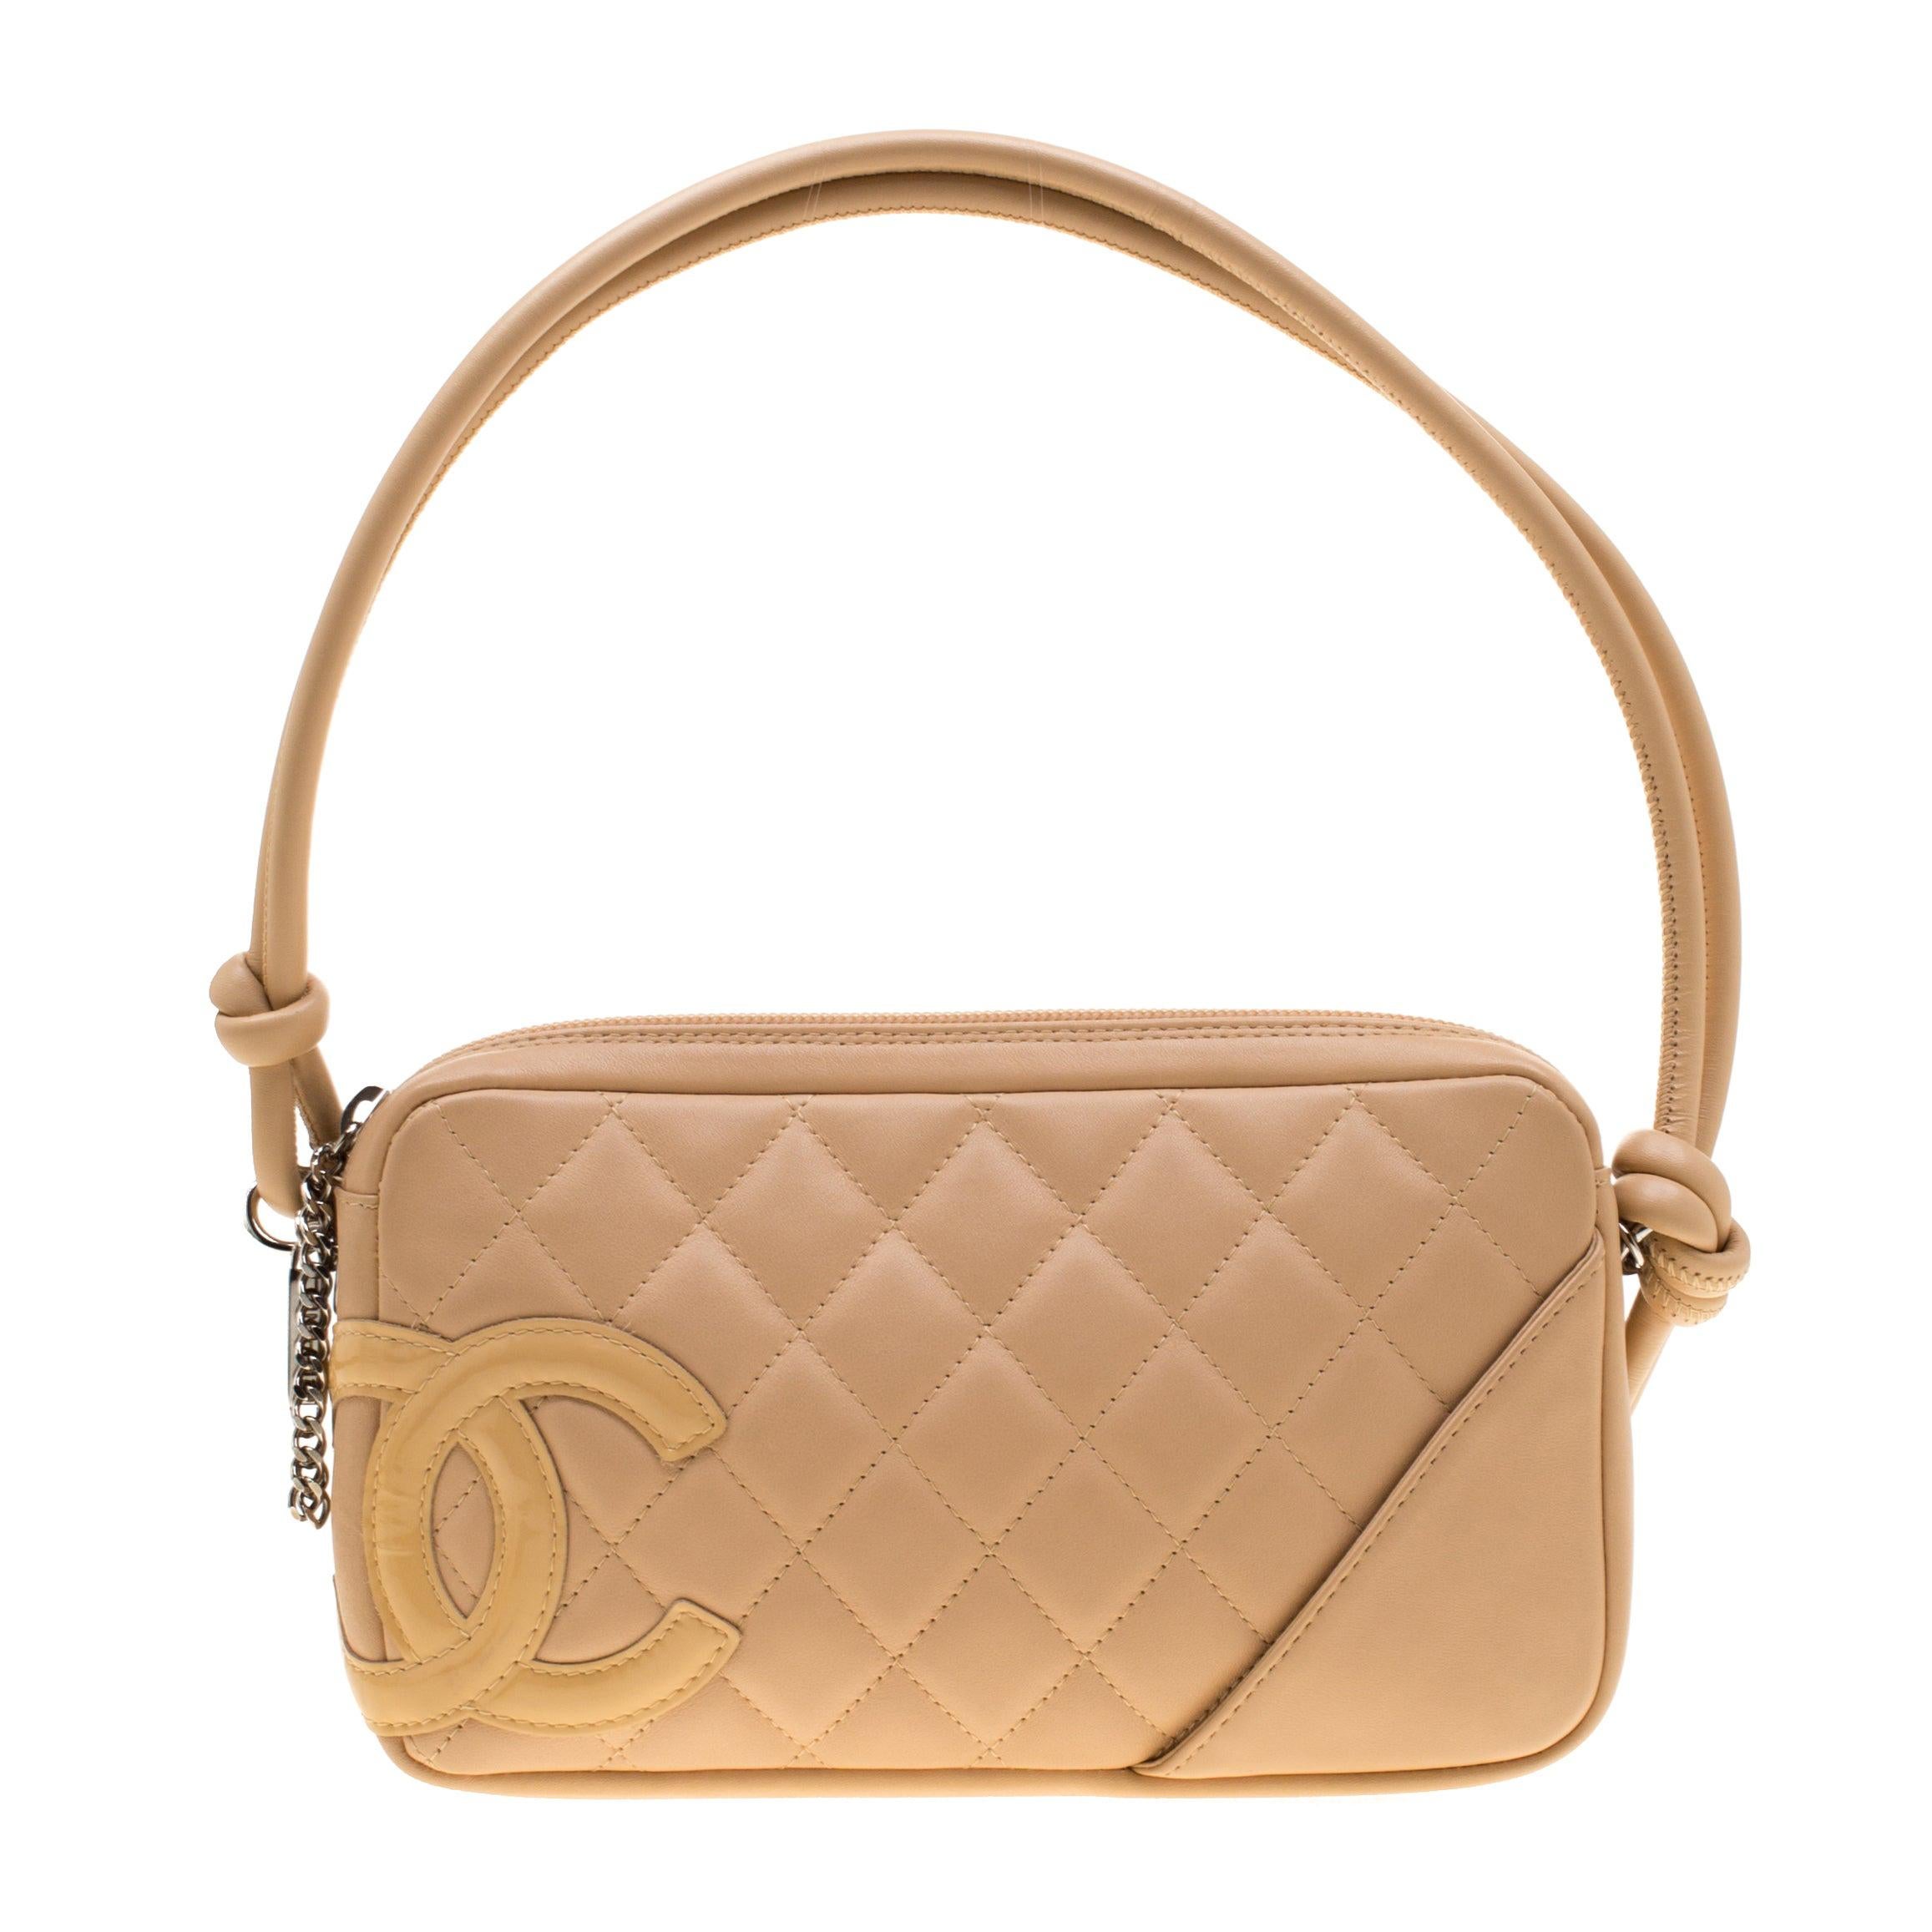 Pink Chanel Small Bucket Bag - For Sale on 1stDibs